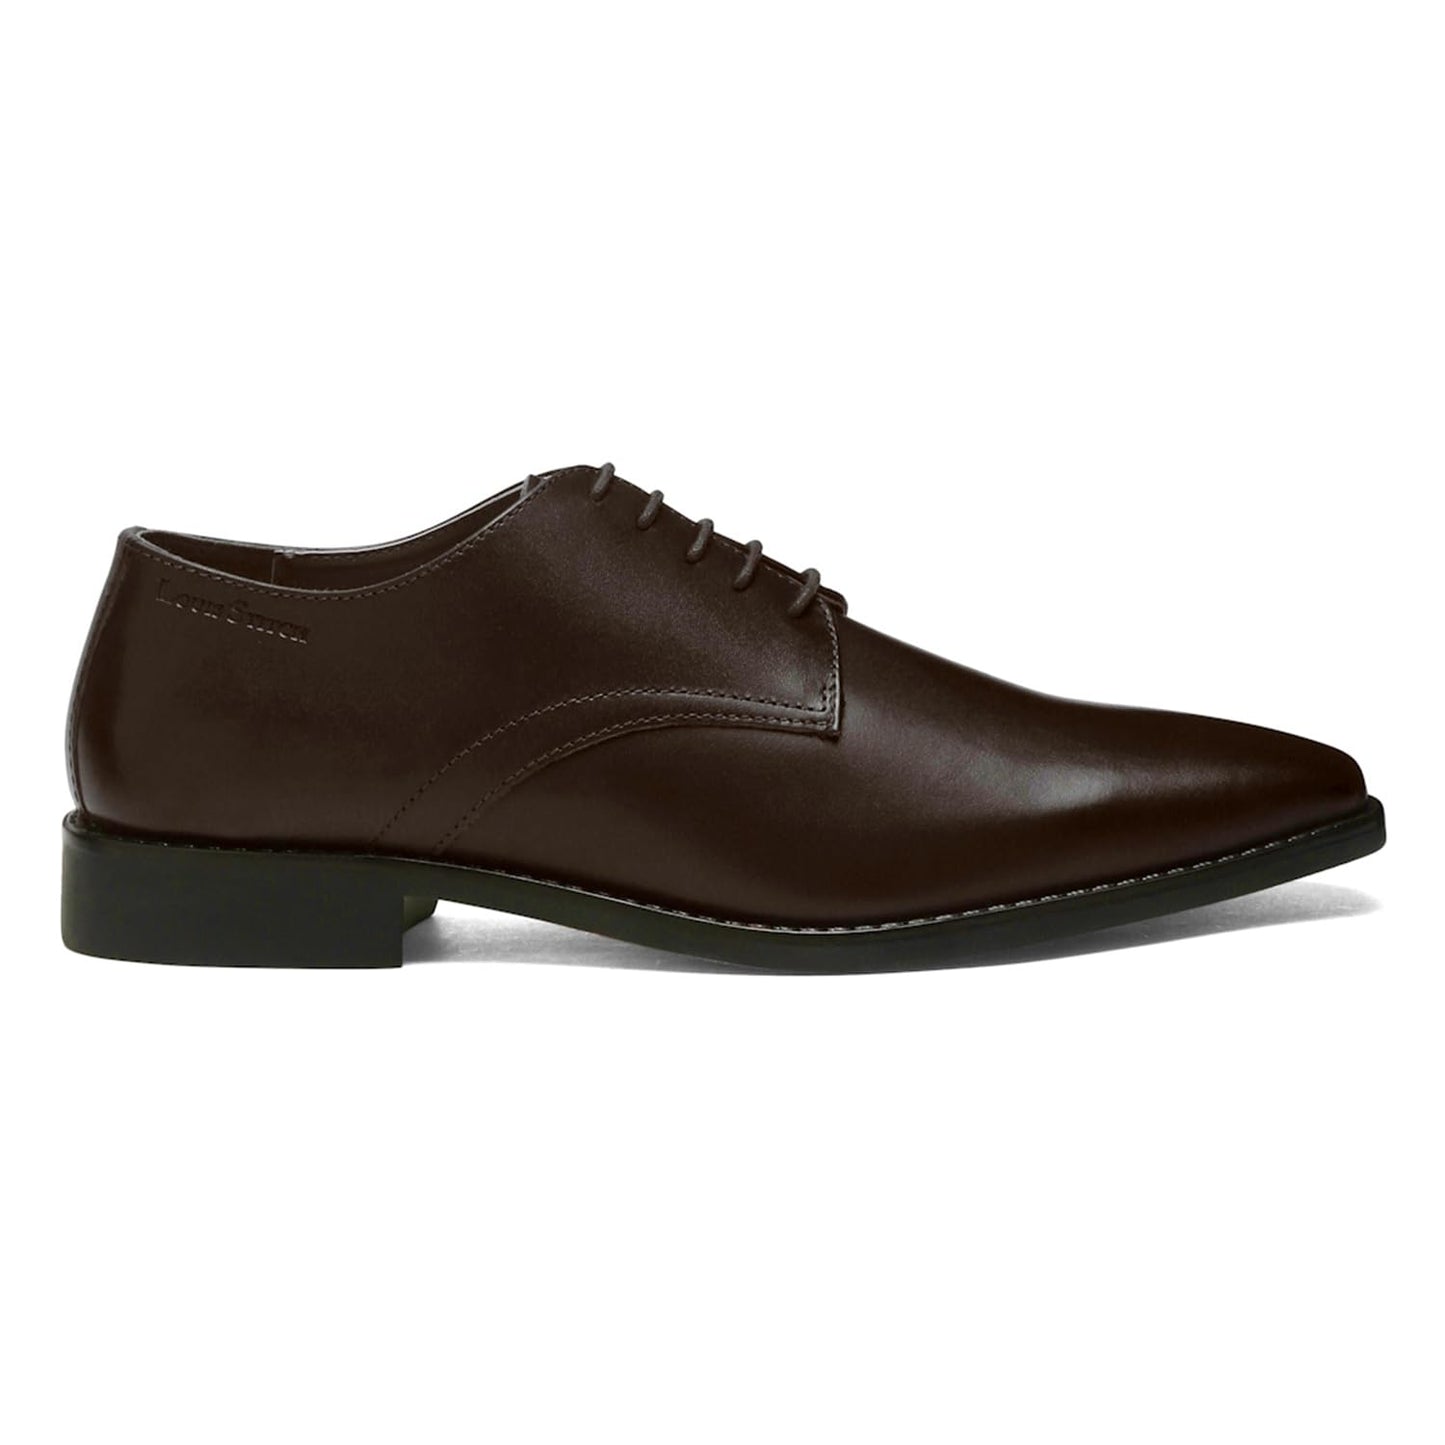 LOUIS STITCH Men's Brunette Brown Italian Leather Shoes Handcrafted Formal Lace Up Derbies for Men (RXPLBB) (Size- 7 UK)